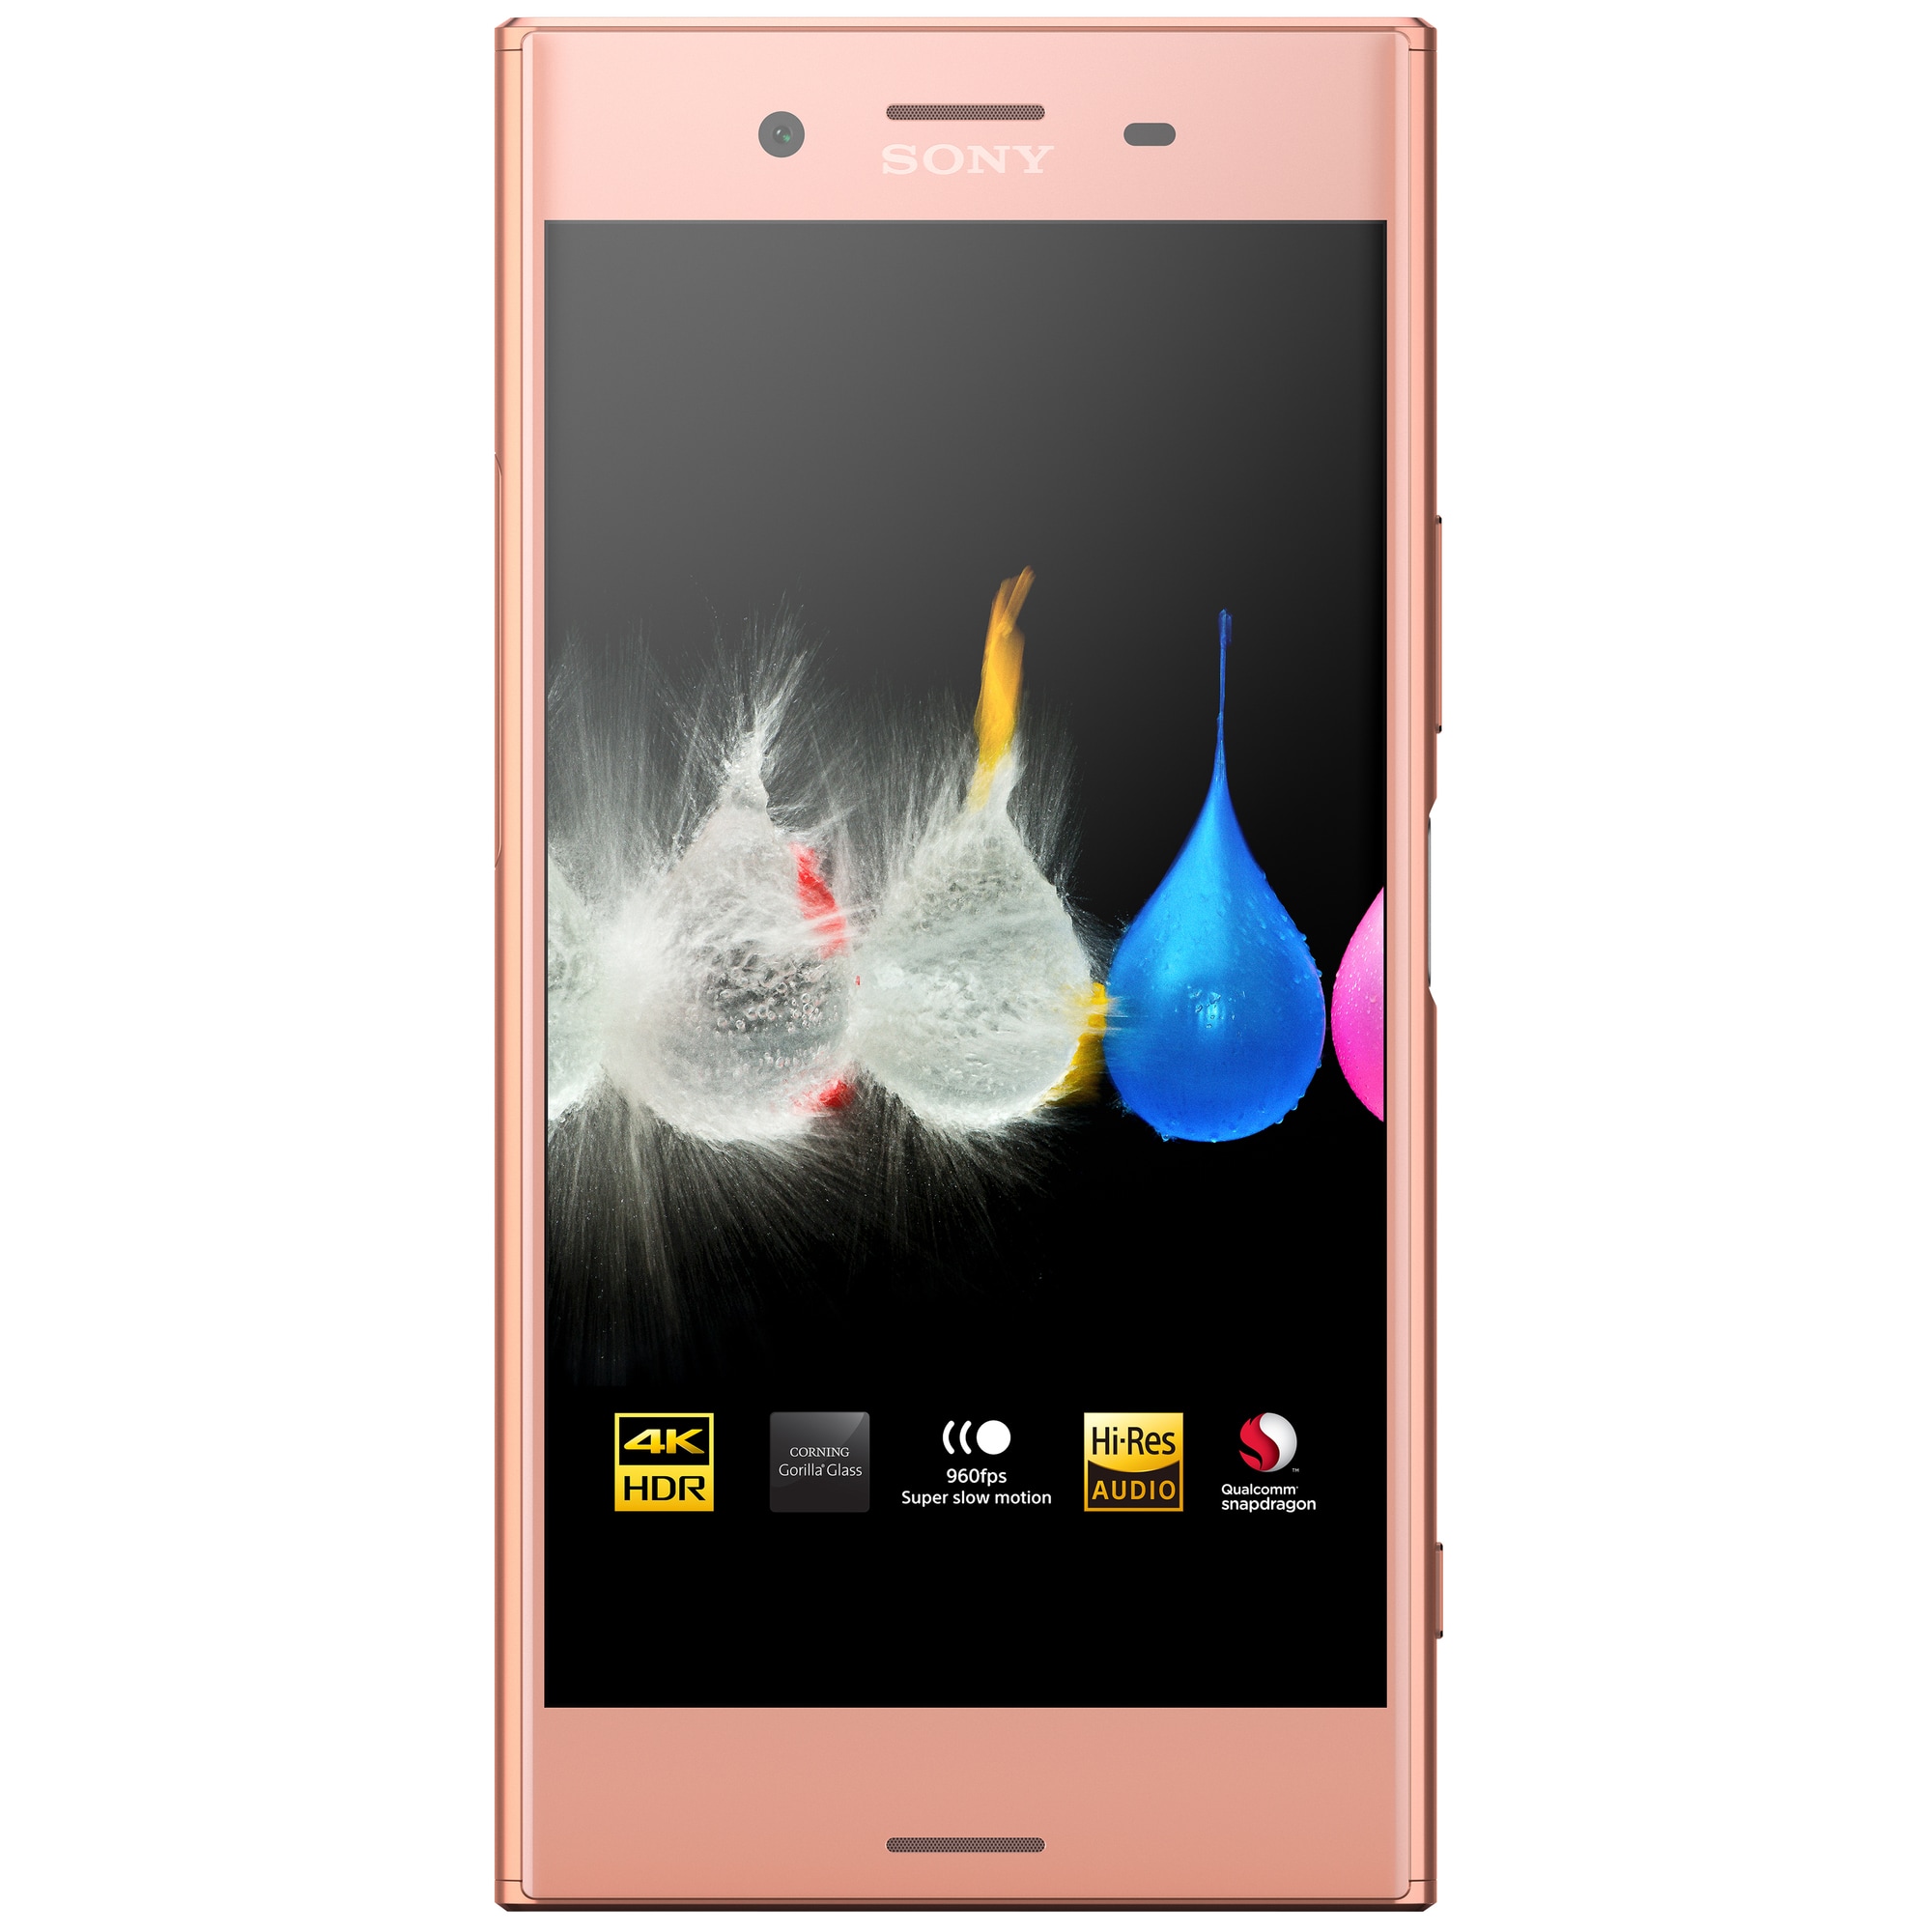 Sony Xperia XZ Premium smarttelefon (bronze pink) - Elkjøp